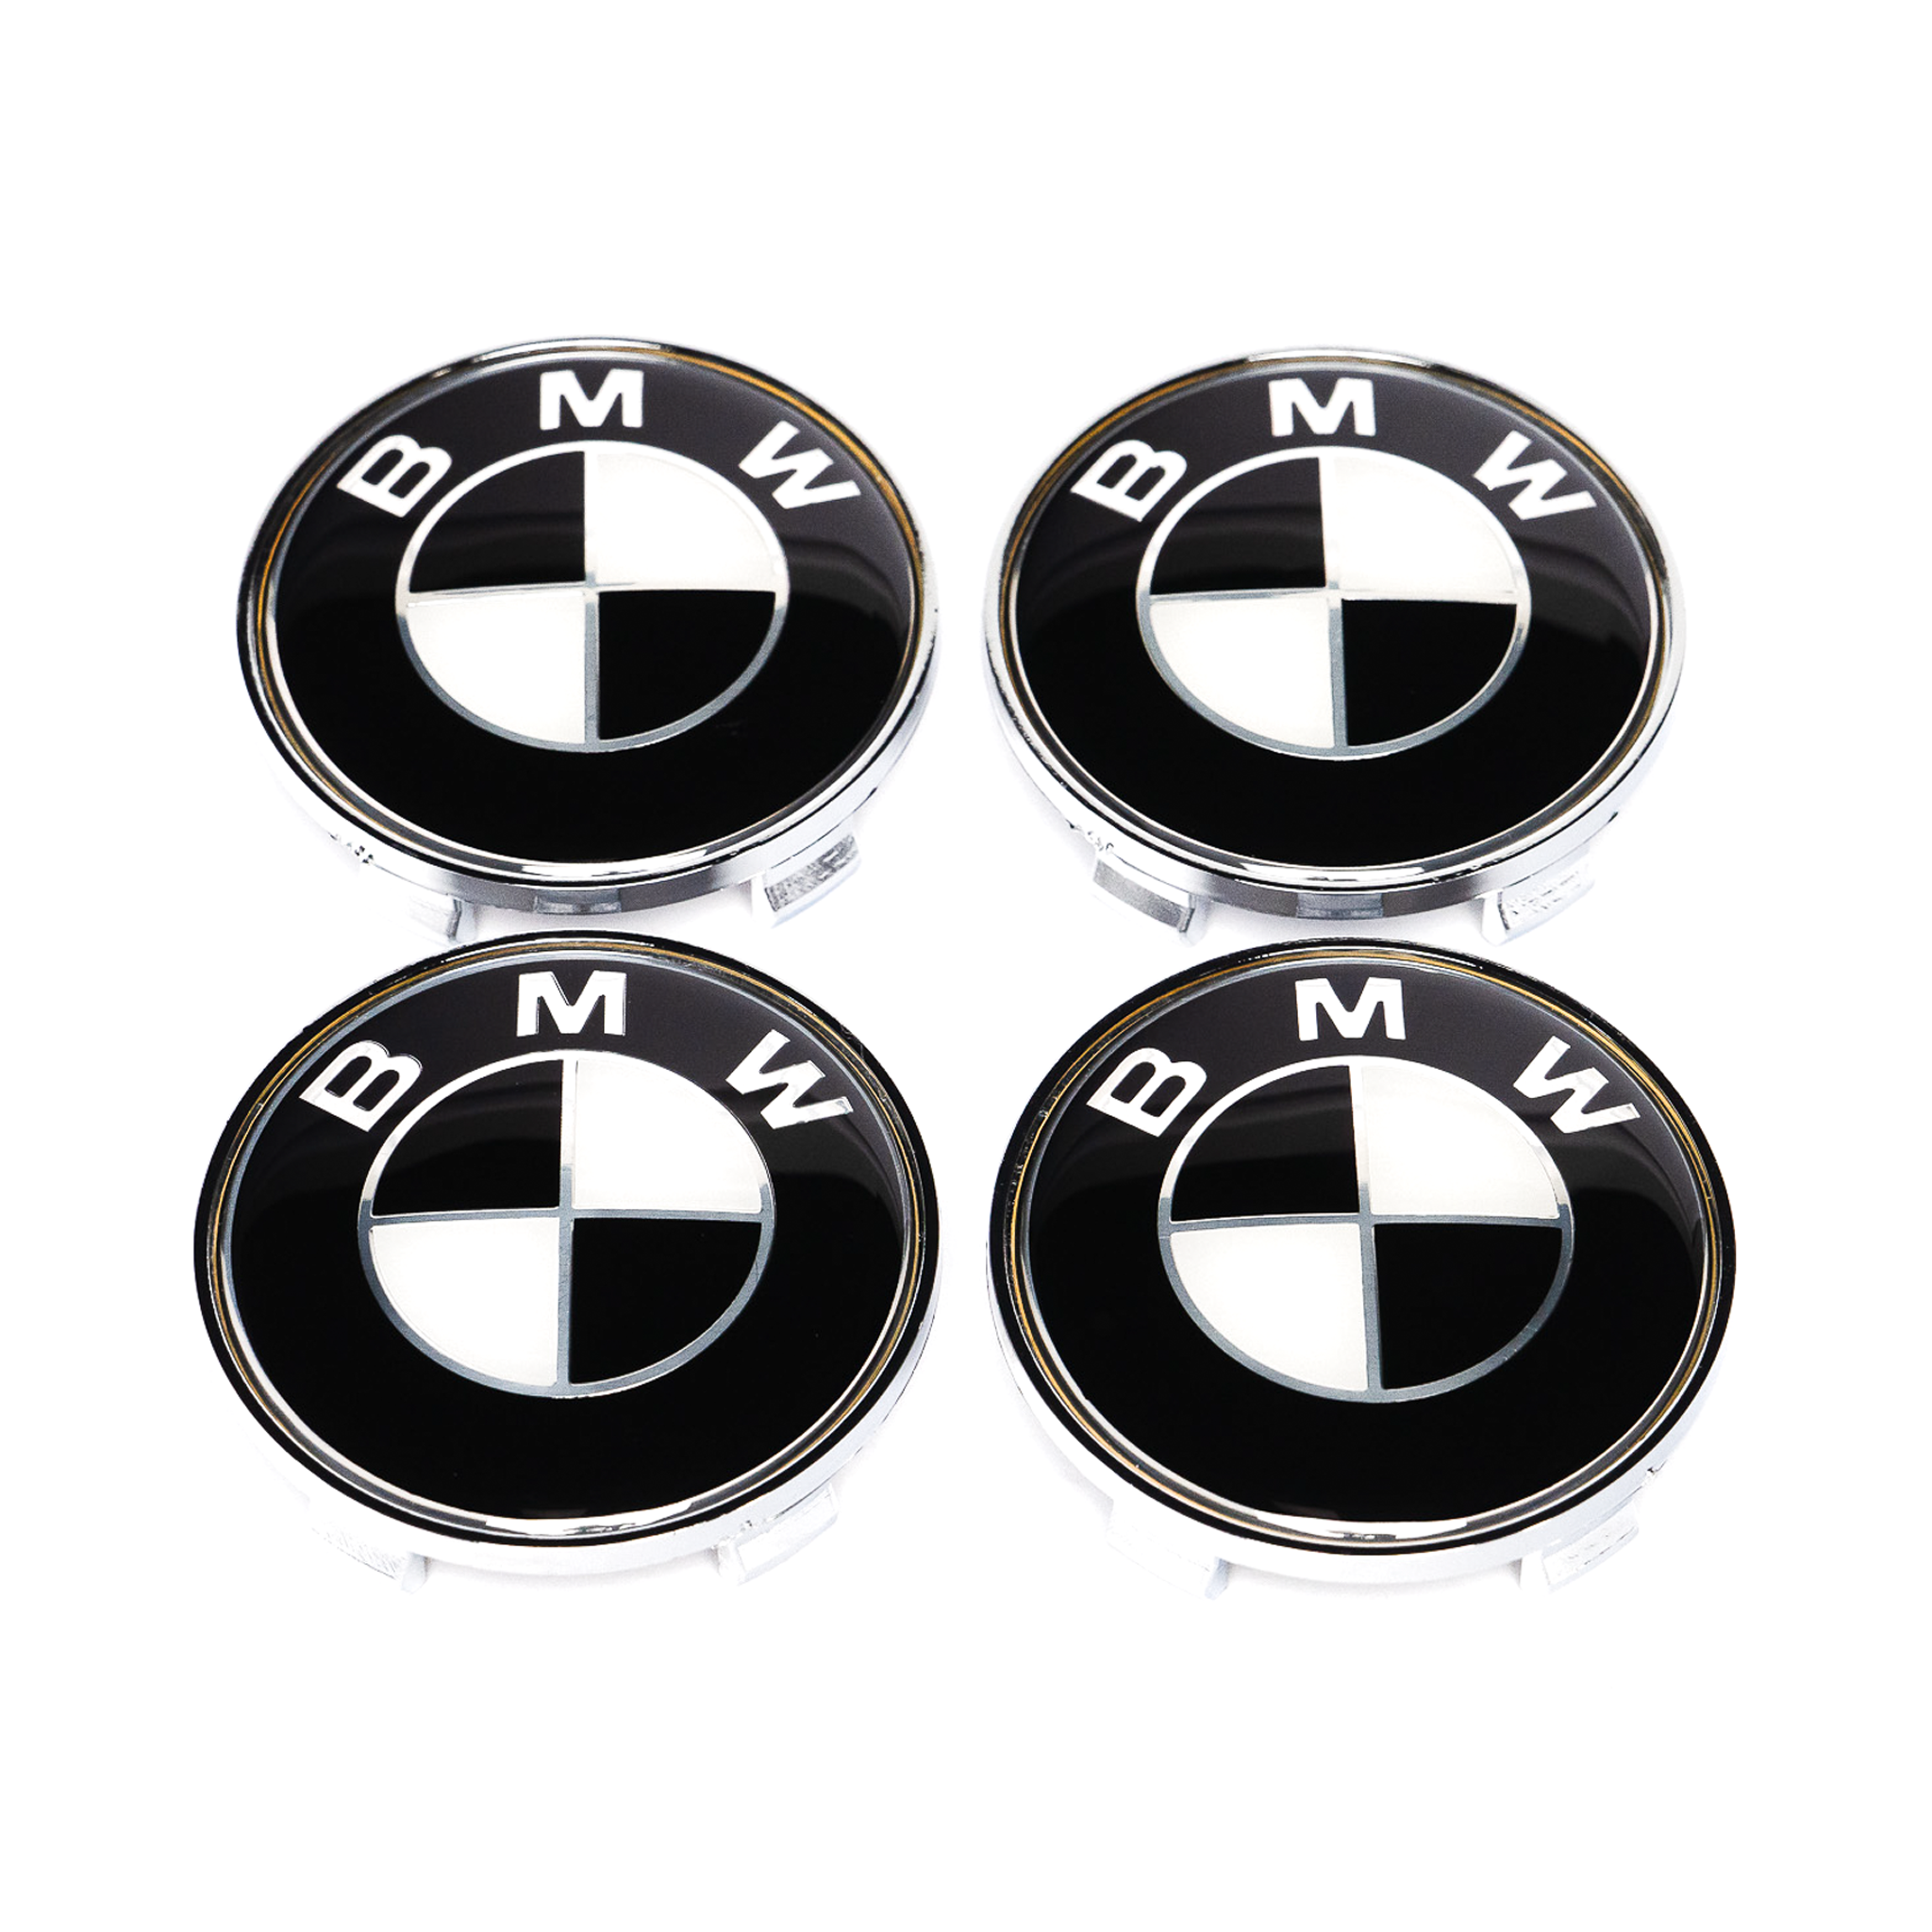 Tapa central de rueda Exon BMW Style Stealth negro/blanco para BMW 1 2 3 4 5 6 7 8-Series 1M M2 M3 M4 X5M X6M Z3 Z4 Z8